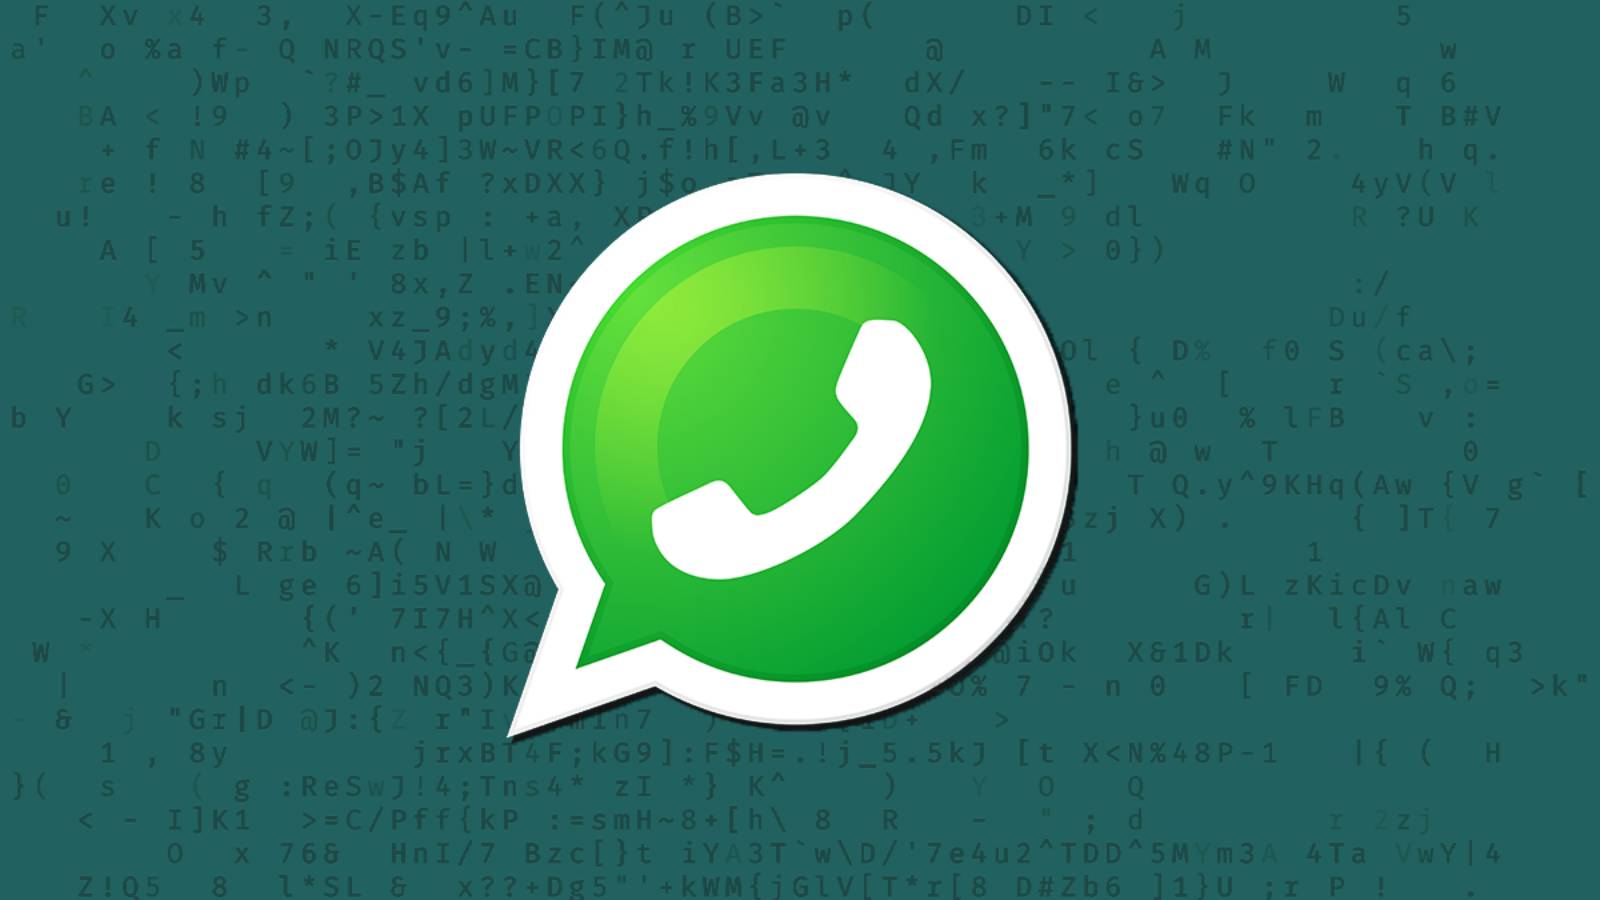 Notifica UFFICIALE WhatsApp MILIONI di persone